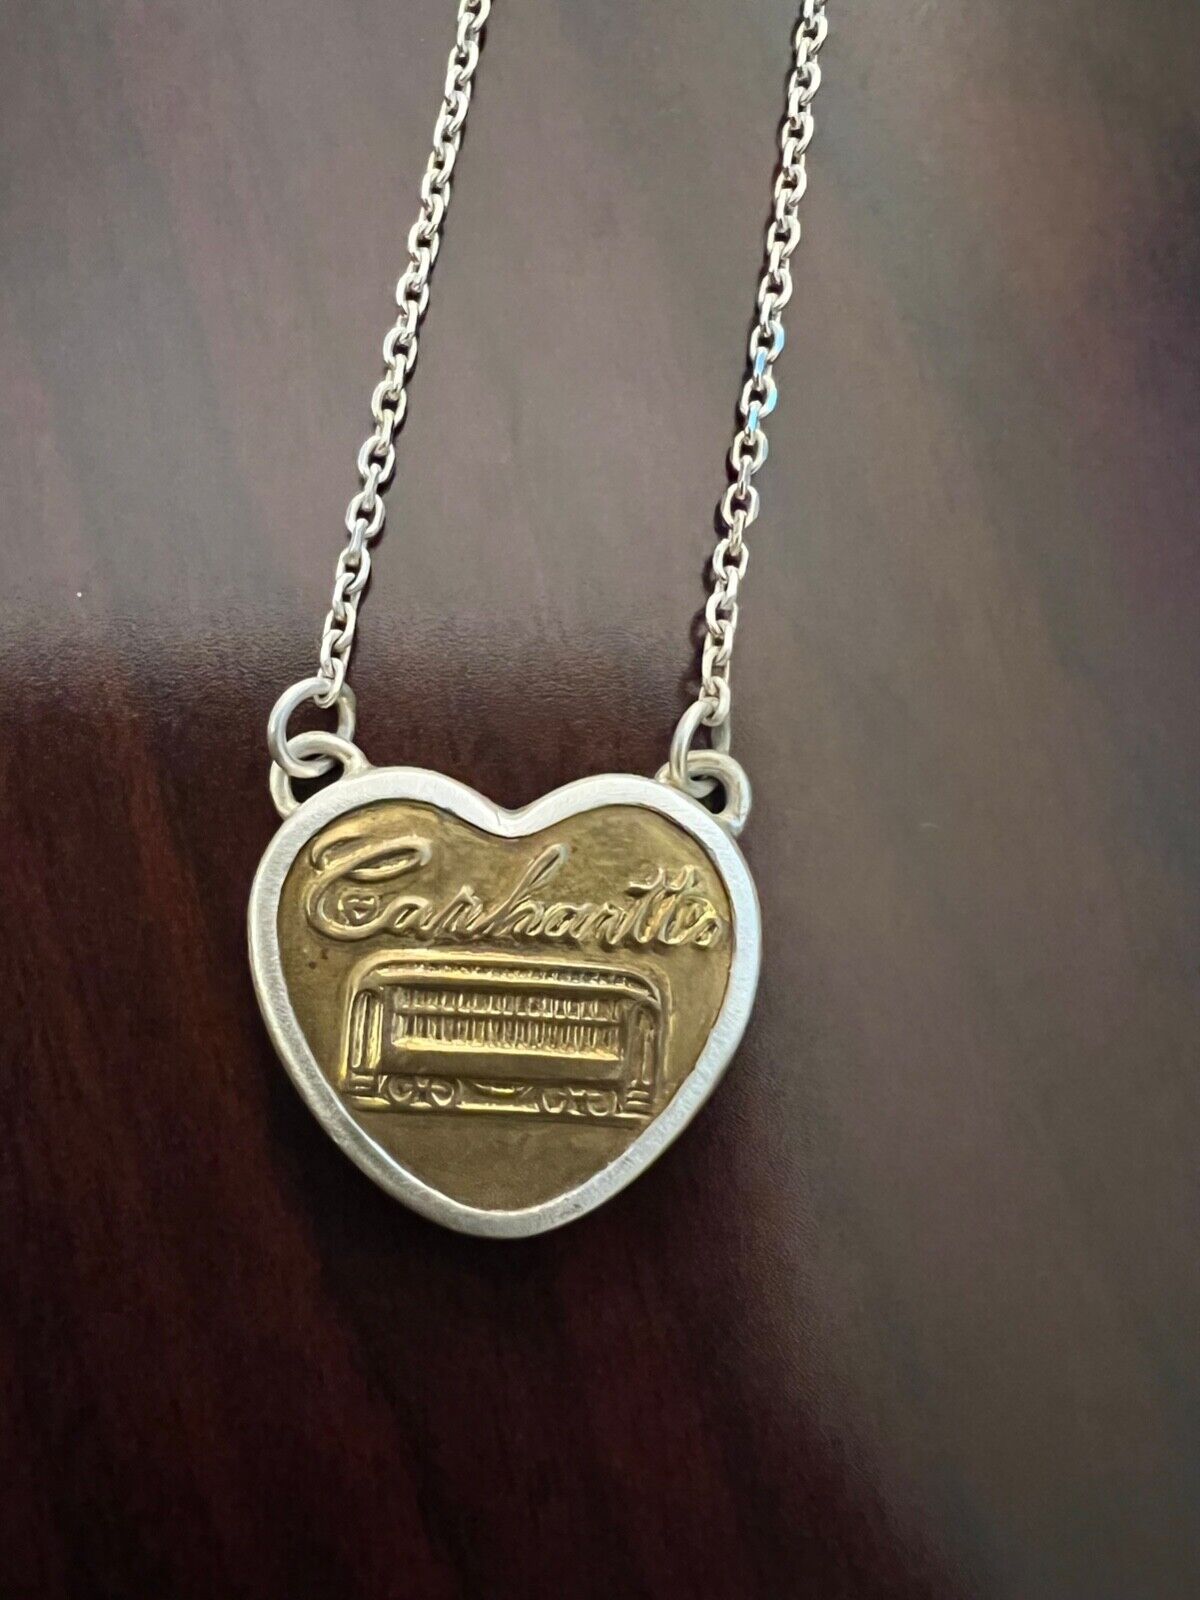 Carhartt's Heart Shaped Button Necklace 